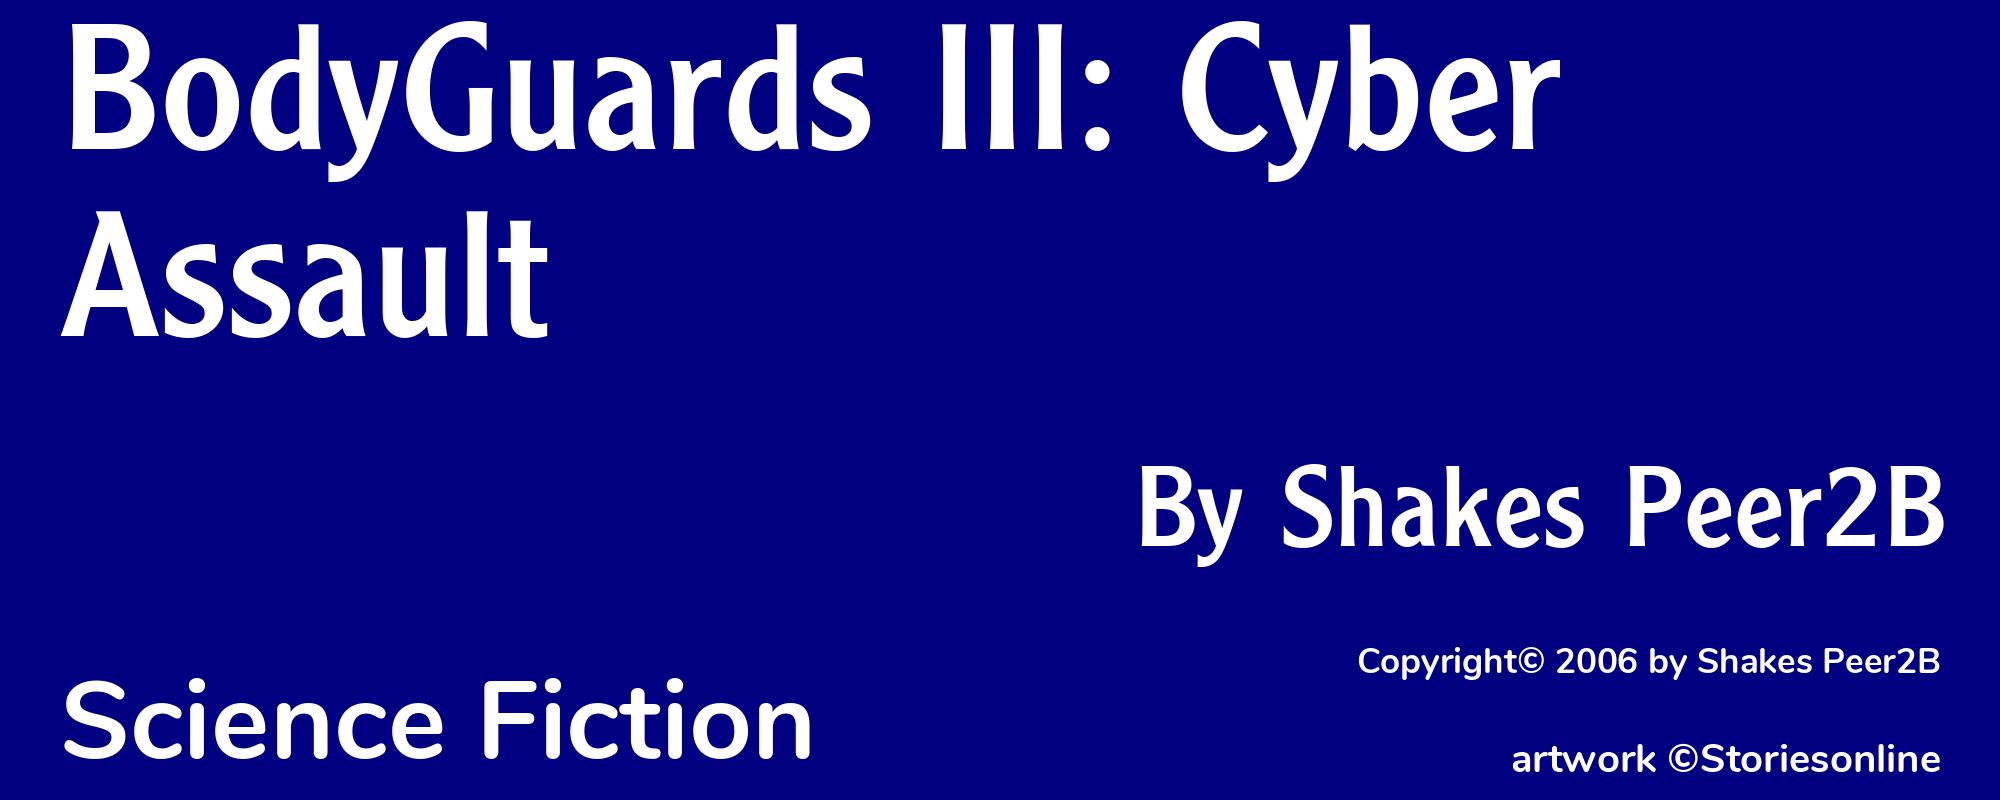 BodyGuards III: Cyber Assault - Cover